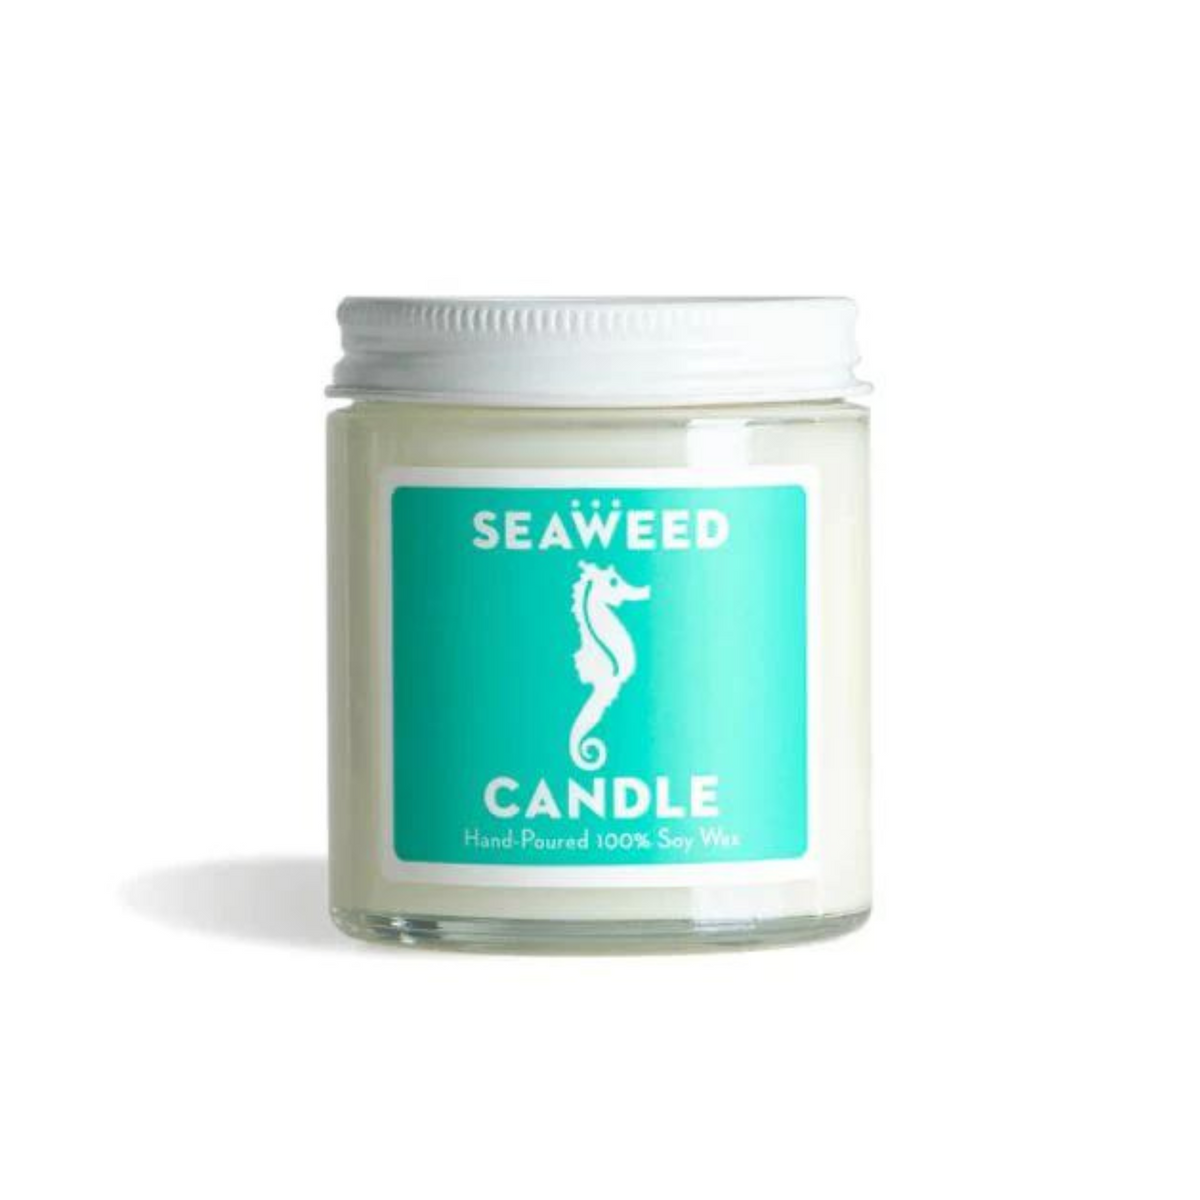 Primary Image of Seaweed Jar Candle